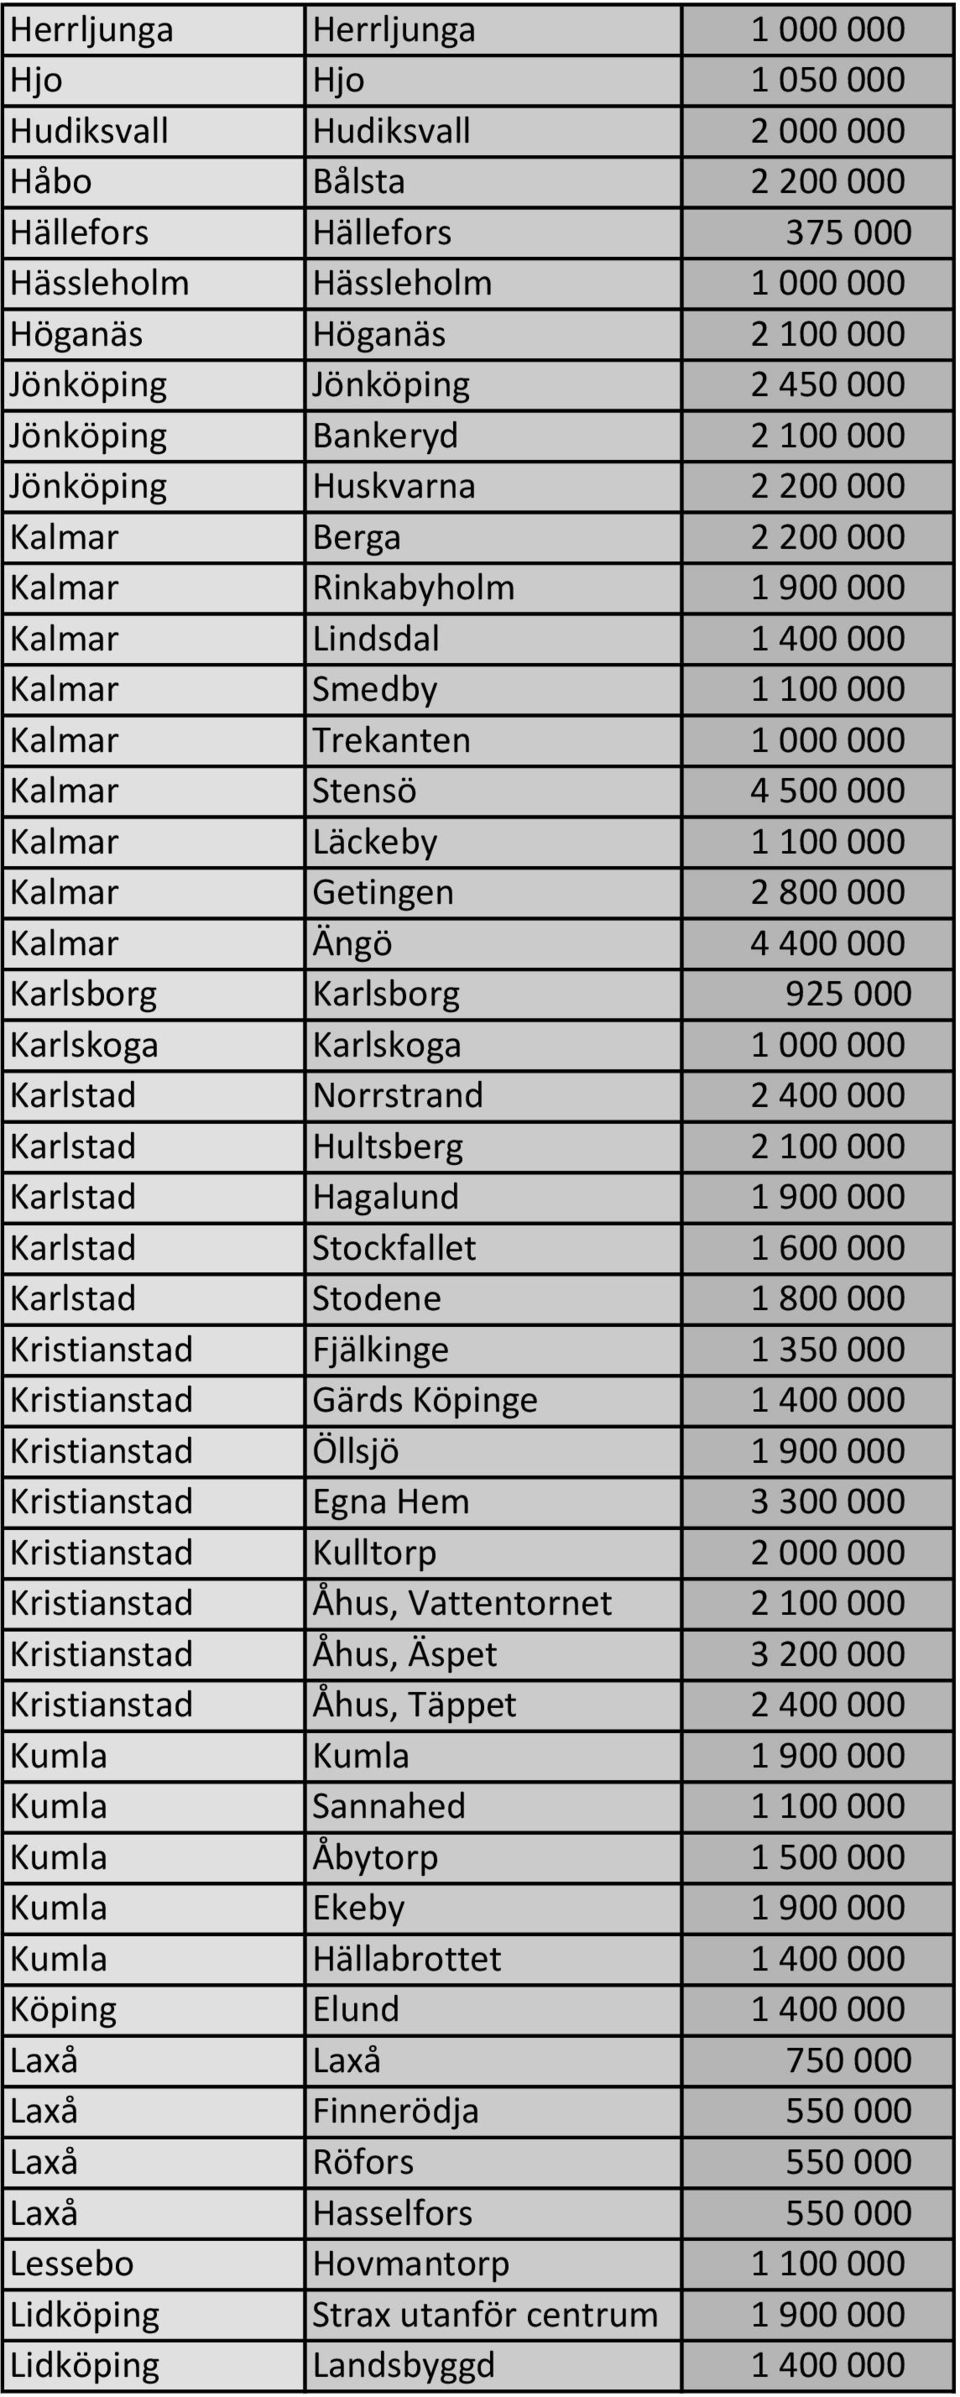 000 000 Kalmar Stensö 4 500 000 Kalmar Läckeby 1 100 000 Kalmar Getingen 2 800 000 Kalmar Ängö 4 400 000 Karlsborg Karlsborg 925 000 Karlskoga Karlskoga 1 000 000 Karlstad Norrstrand 2 400 000